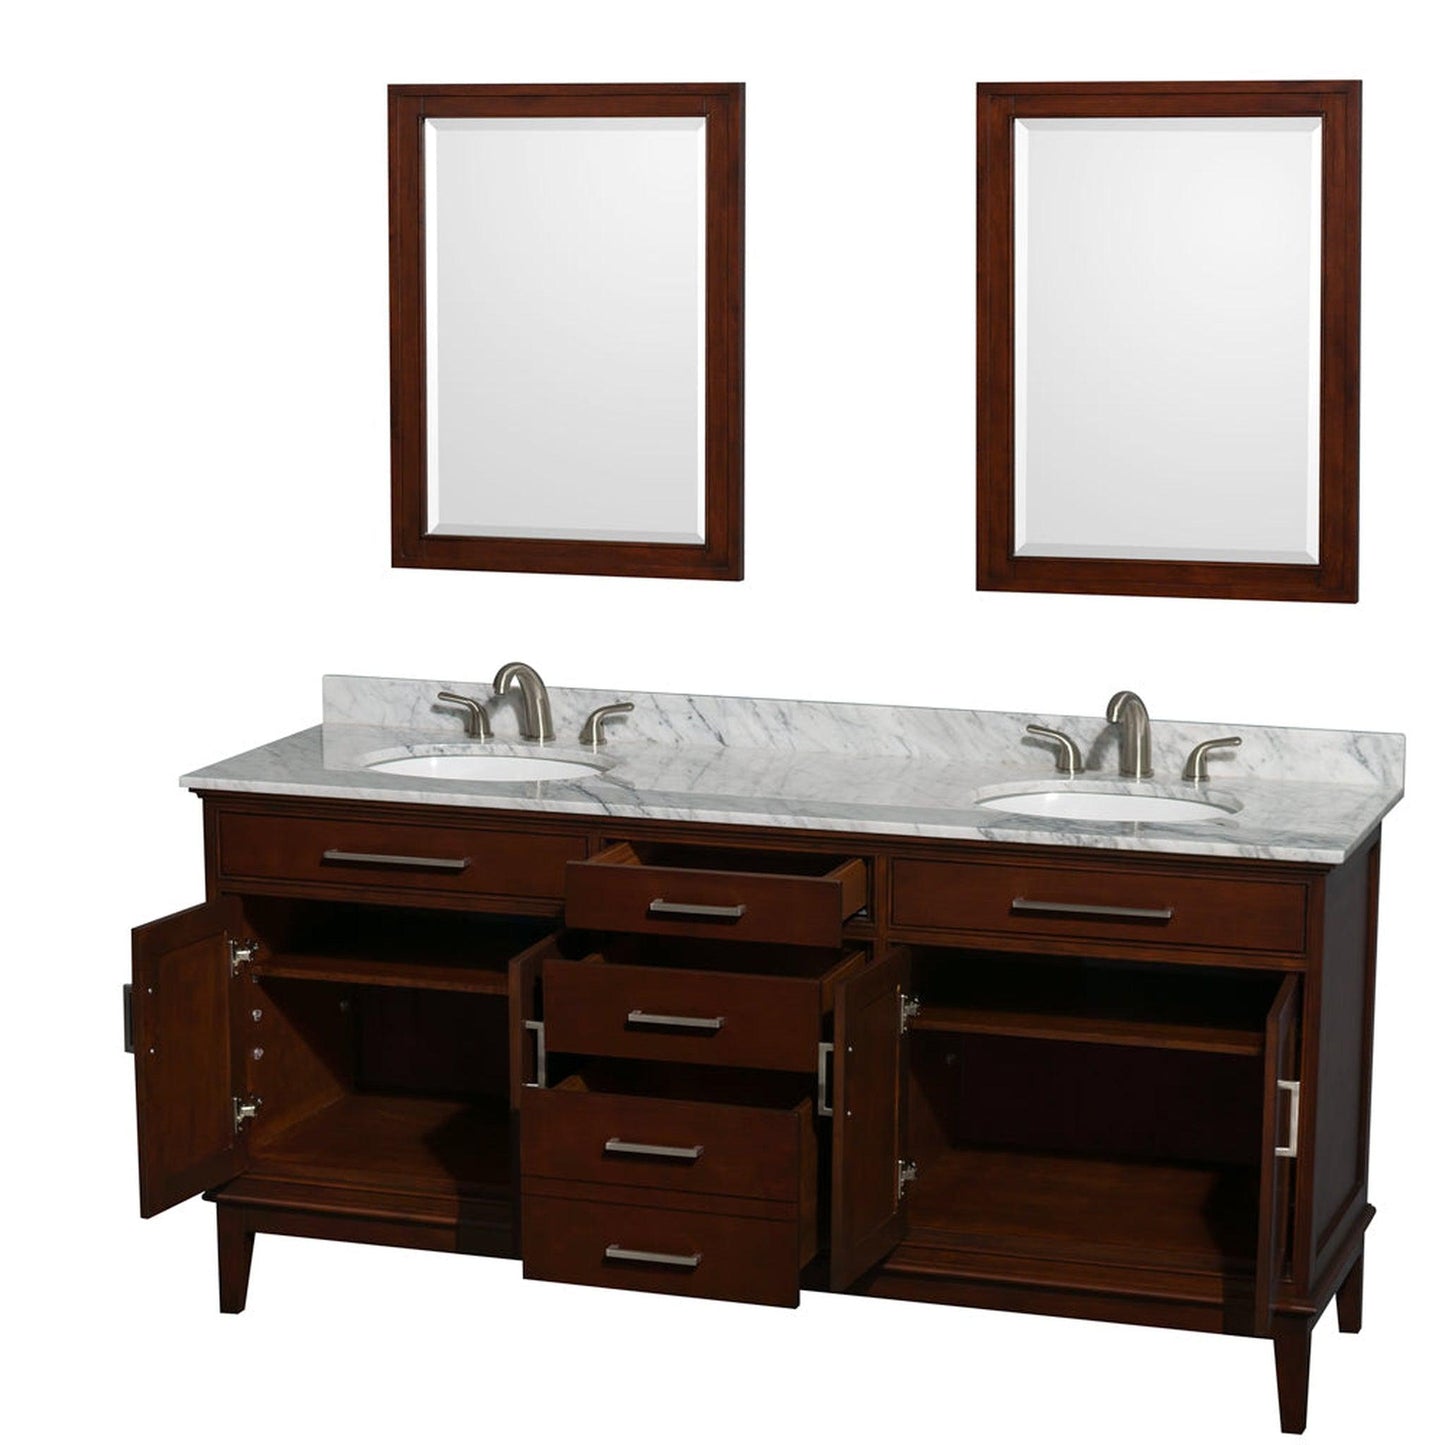 Wyndham Collection Hatton 72" Double Bathroom Vanity in Dark Chestnut, White Carrara Marble Countertop, Undermount Oval Sinks, and 24" Mirror